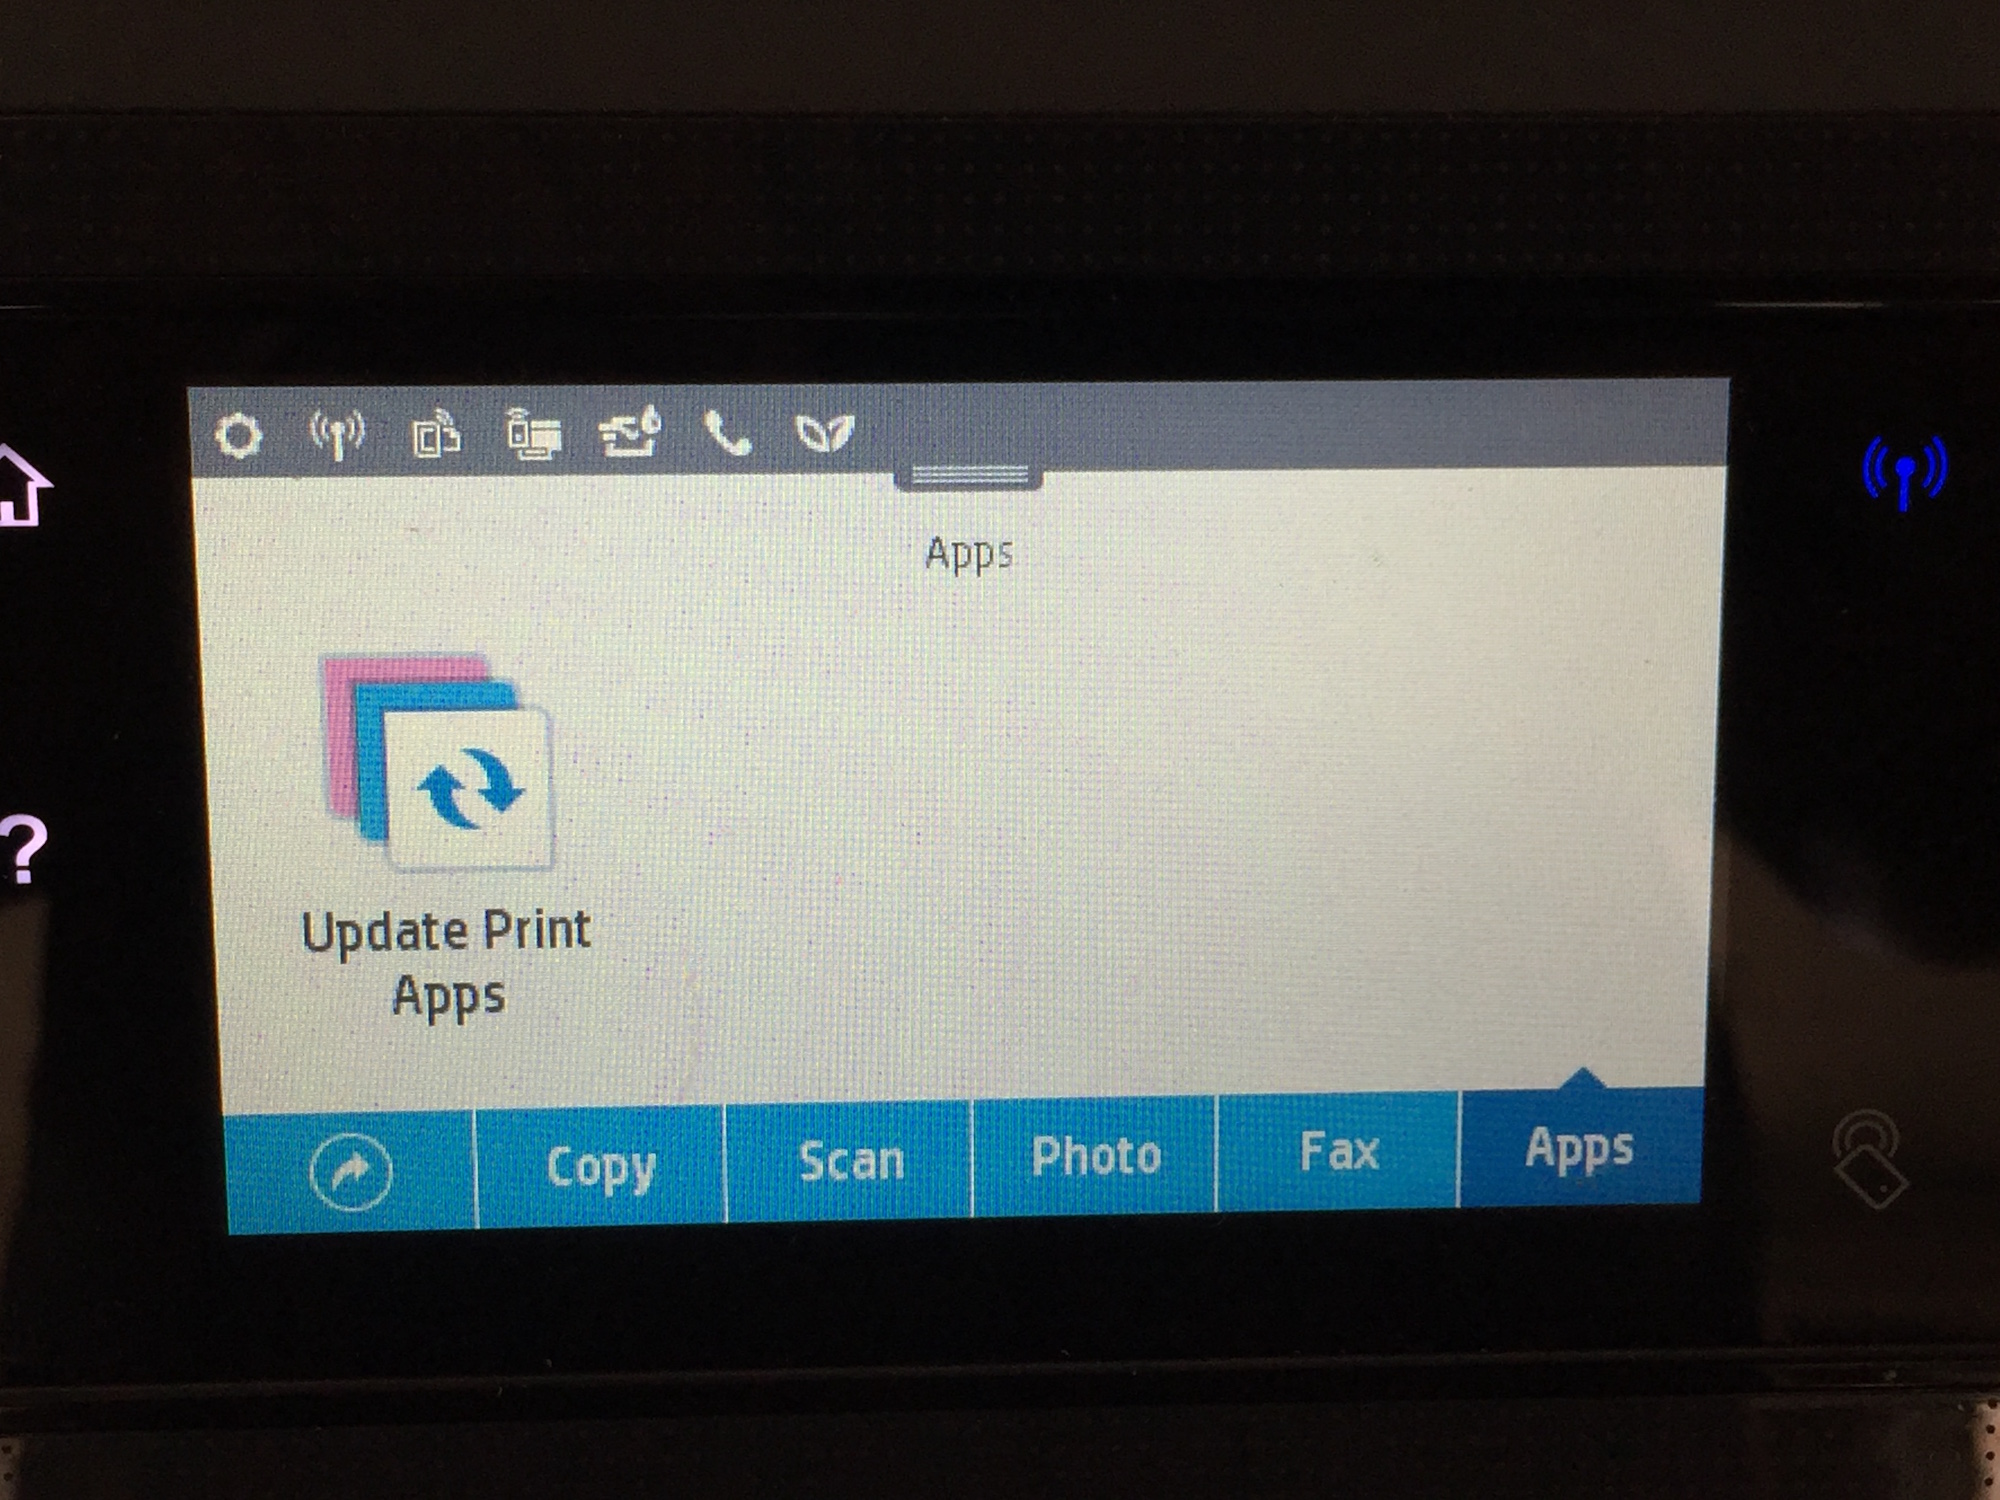 Update Print Apps